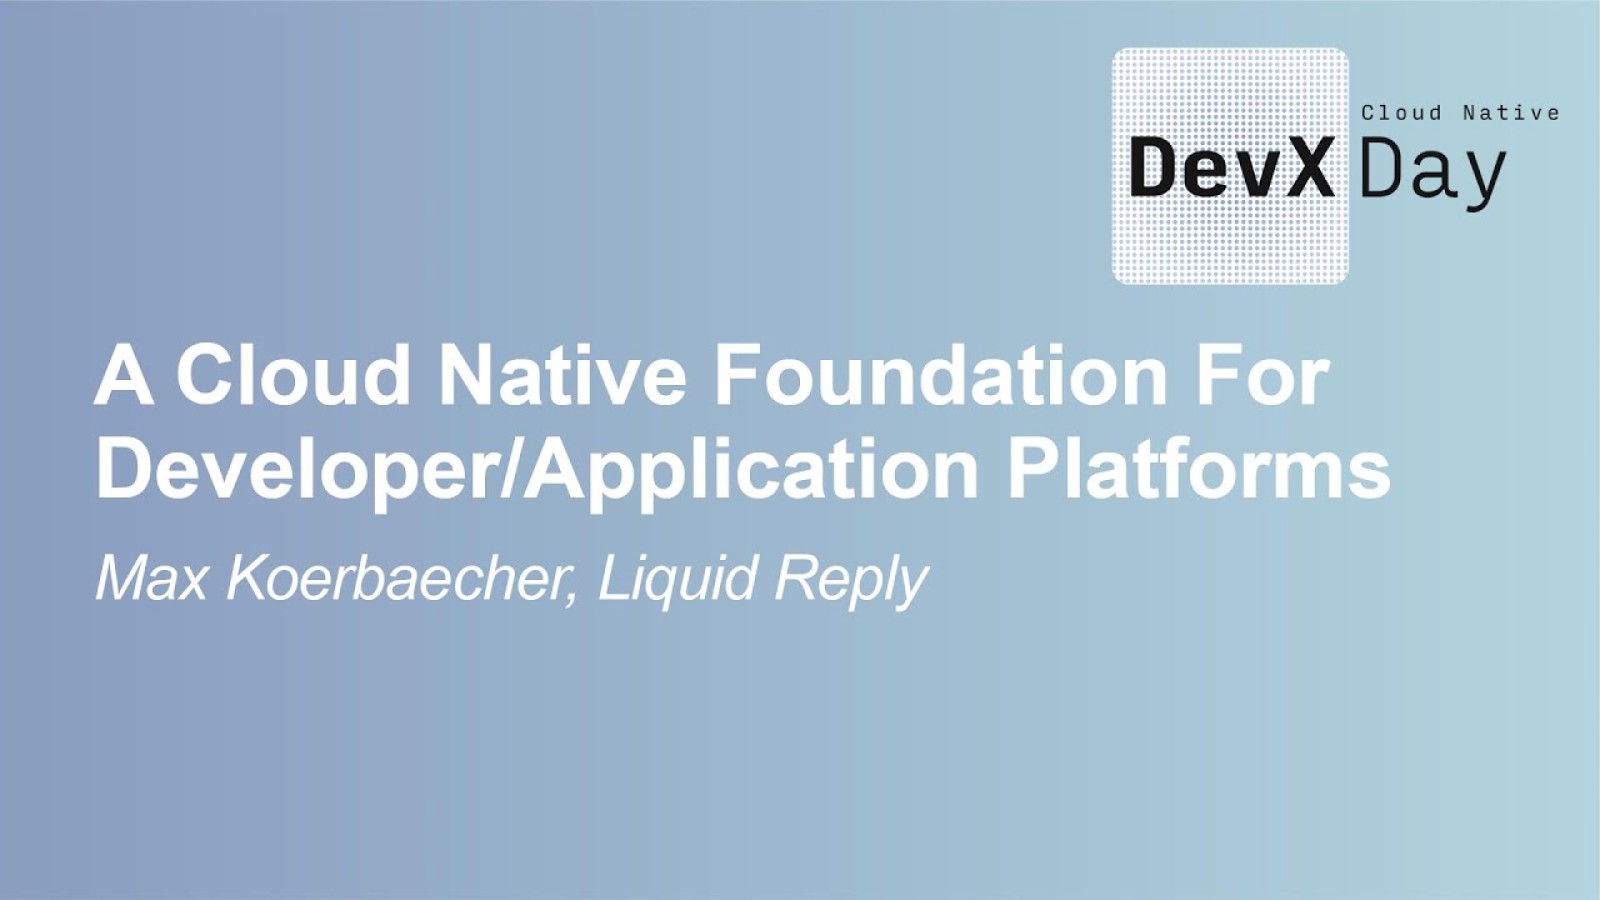 A Cloud Native Foundation for Developers/Application Platforms